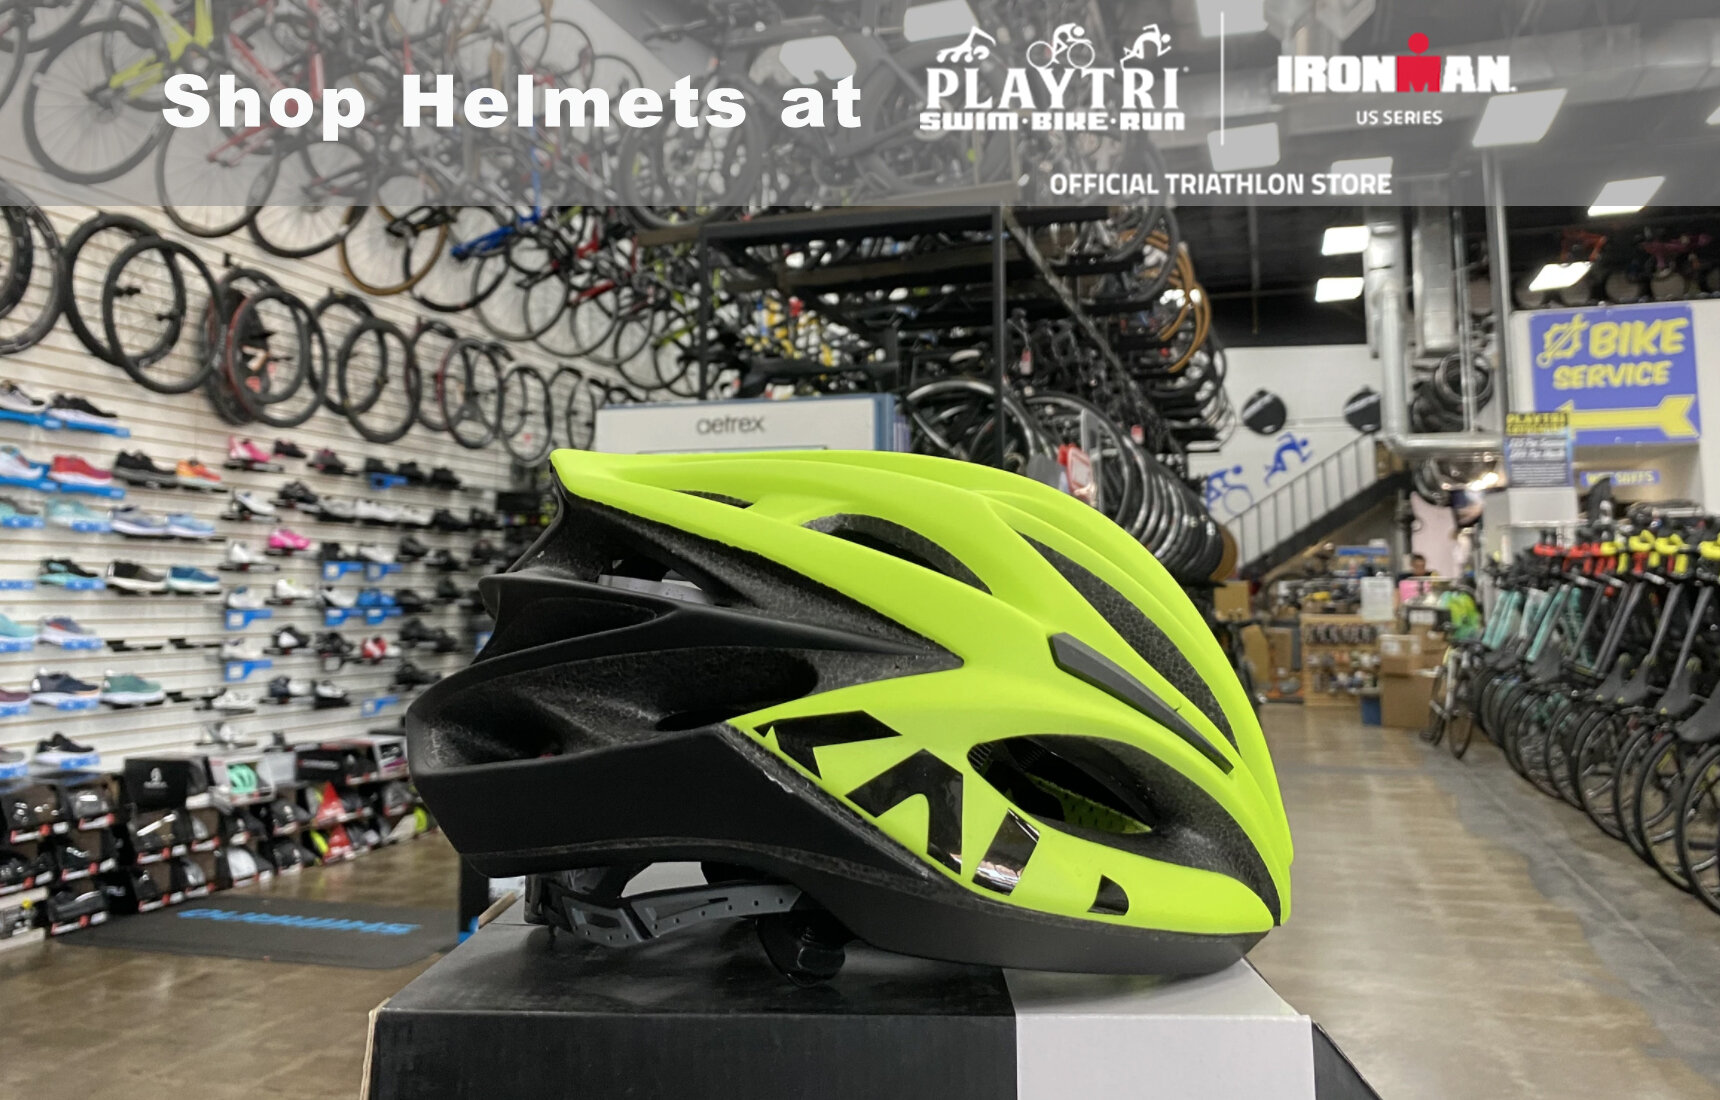 Shop helmets at Playtri.jpg